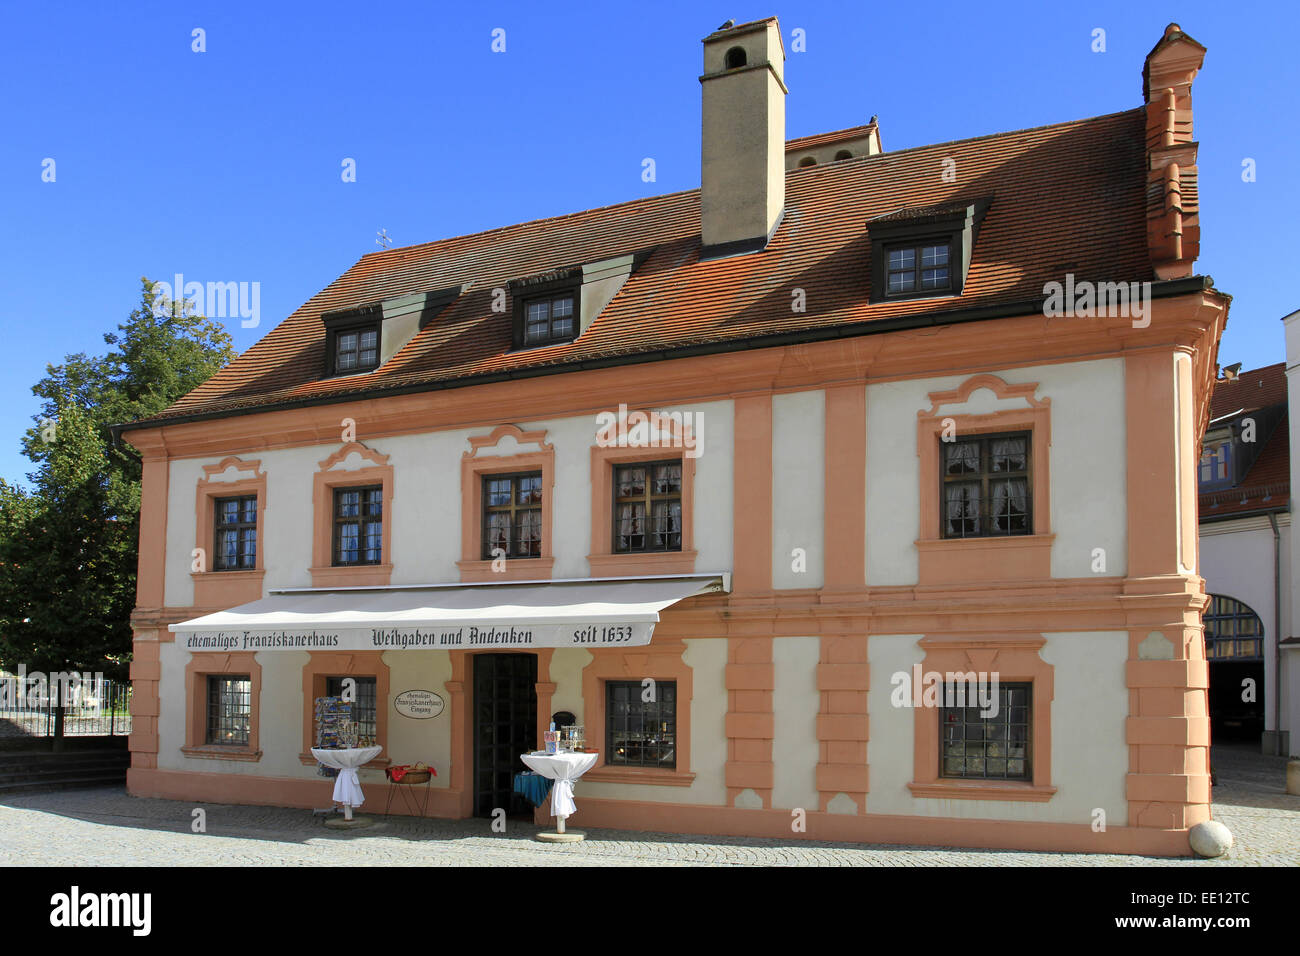 Ehemaliges Franziskanerhaus, Wallfahrtsort Altoetting, Oberbayern, Bayern, Deutschland Stock Photo